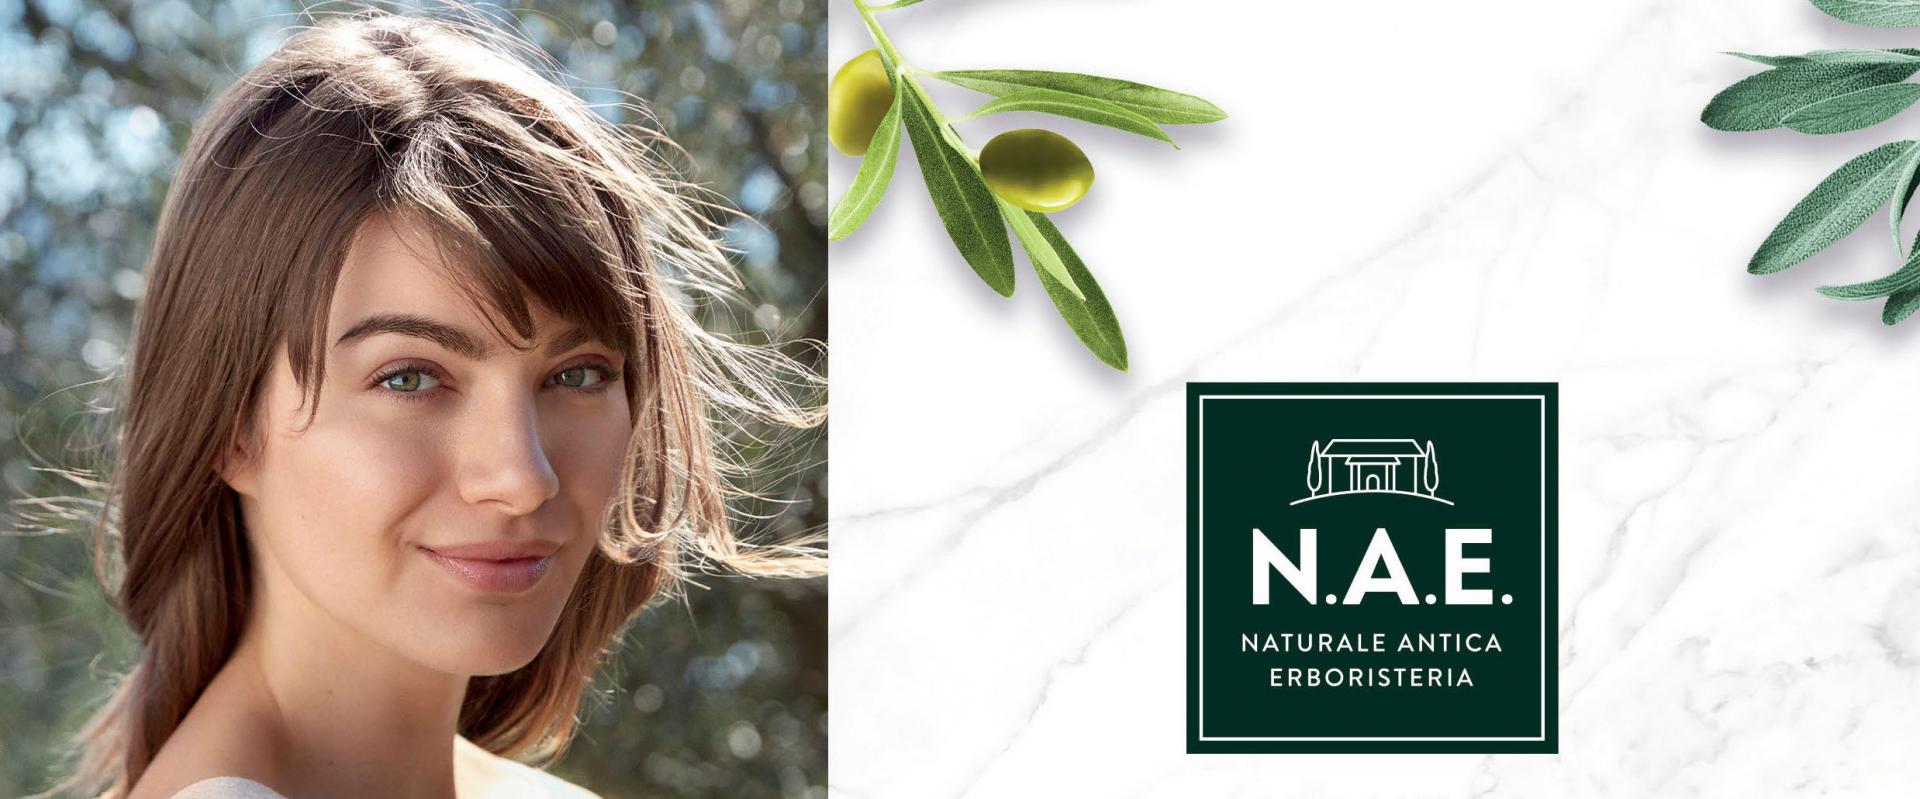 Nowa marka kosmetyków naturalnych - N.A.E. – Naturale Antica Erboristeria już w Polsce